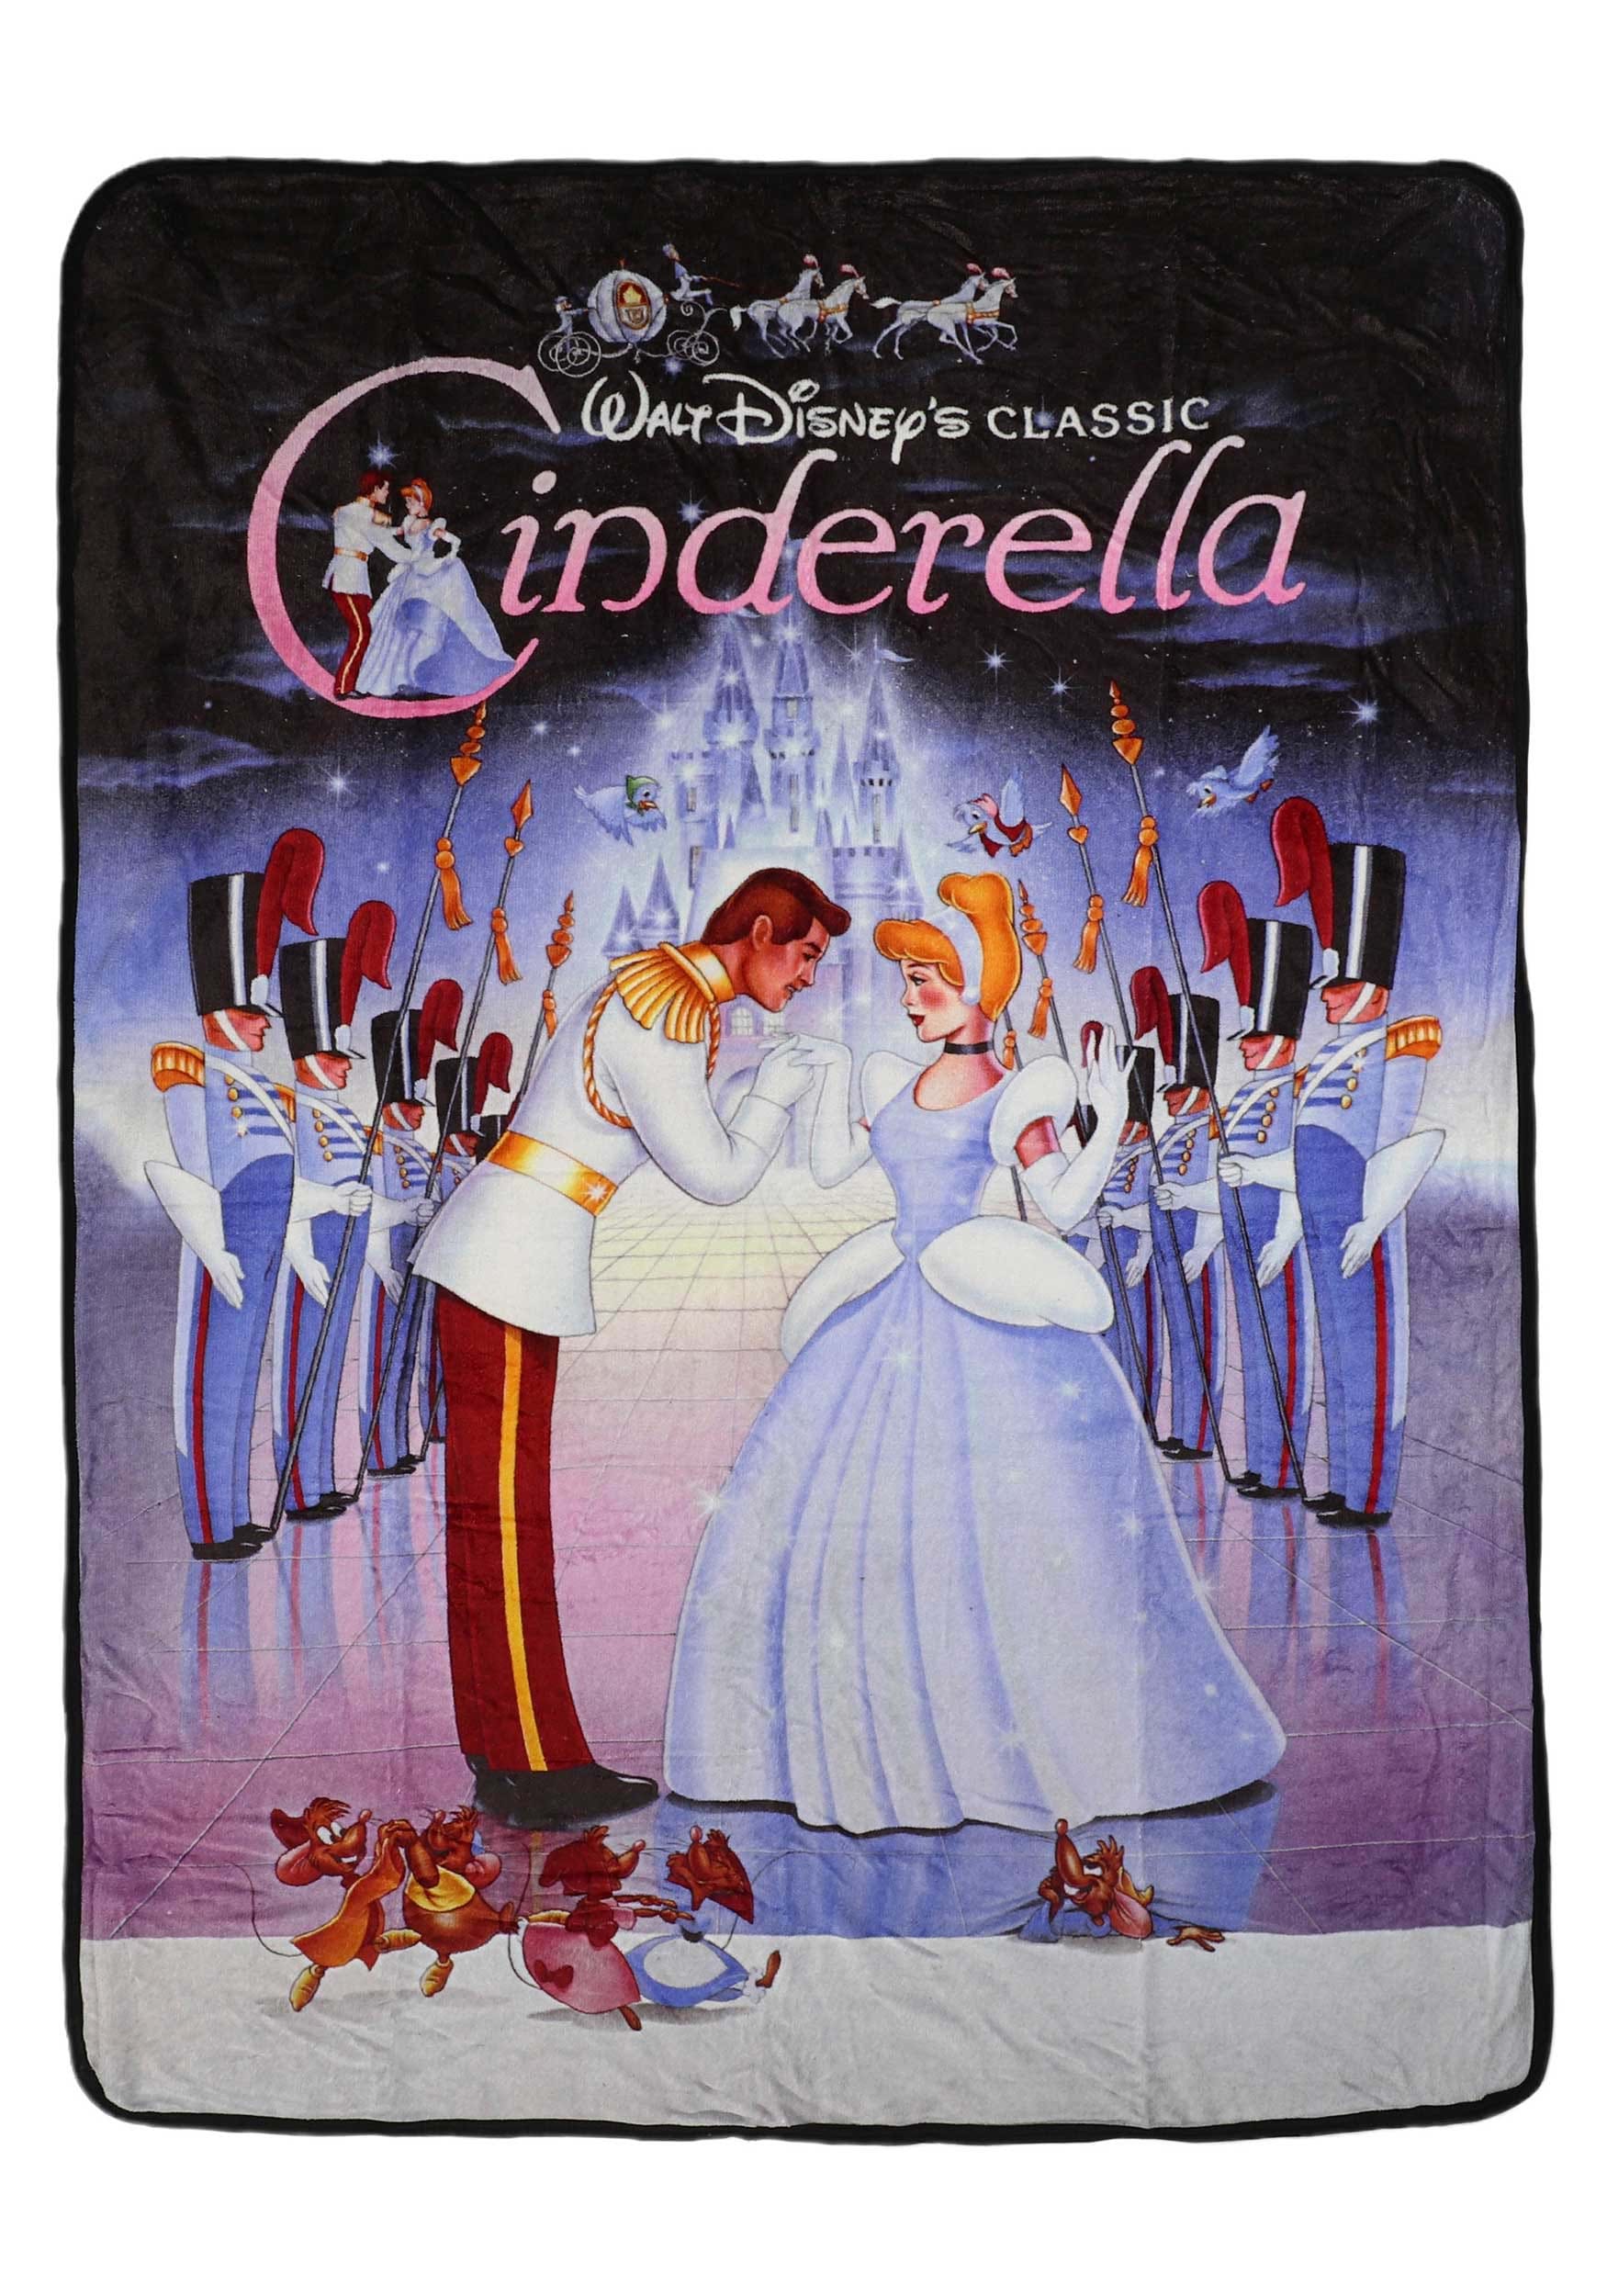 Cinderella's Castle Blanket, Blanket, Throw Blanket, Home Decor